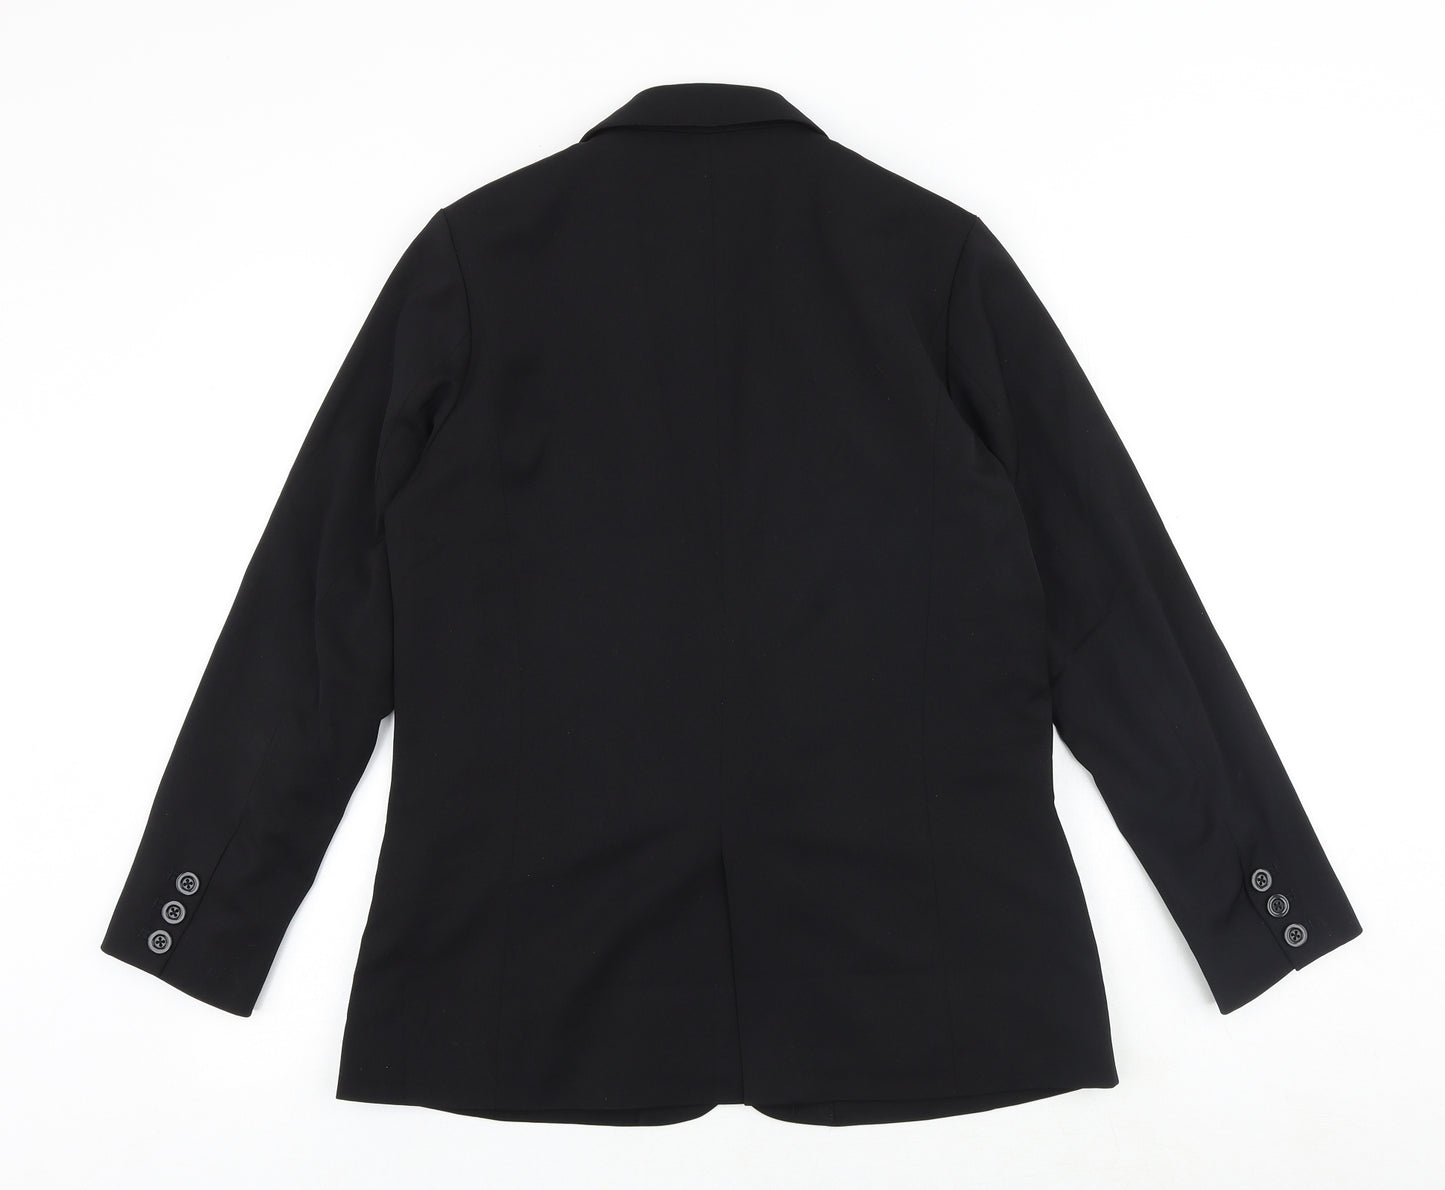 Lativ Collection Womens Black Polyester Jacket Blazer Size XL